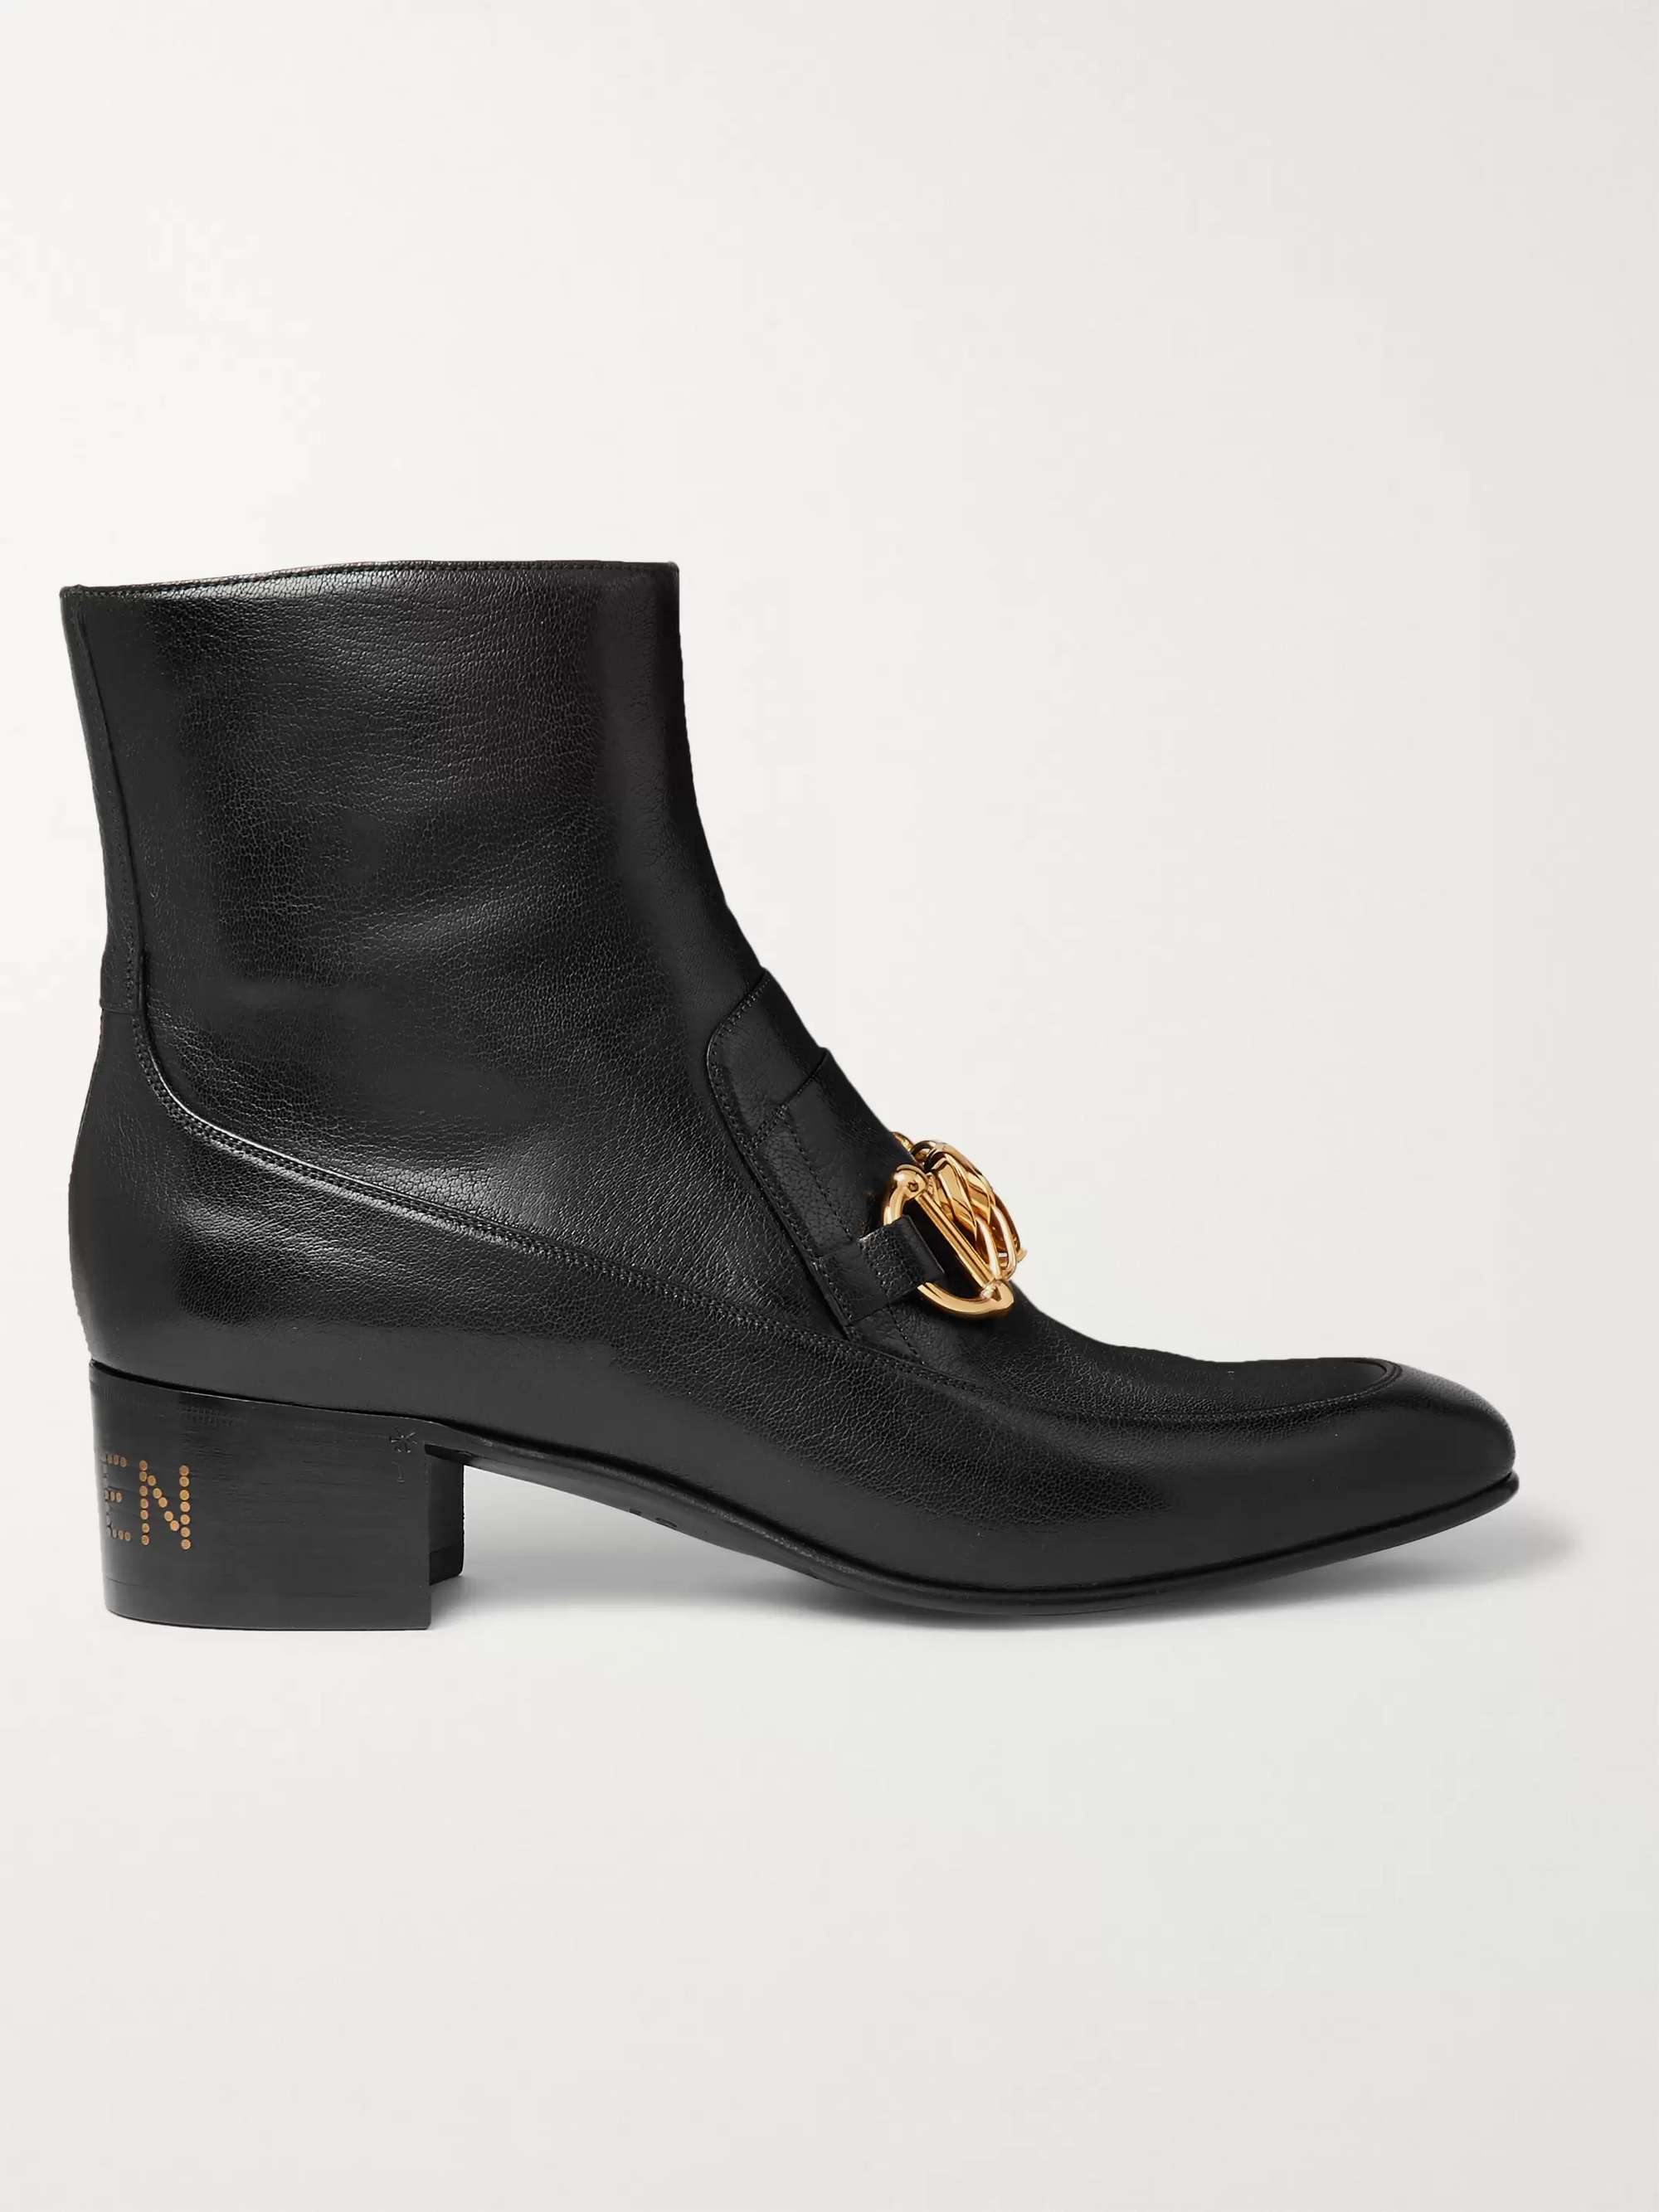 GUCCI Horsebit Leather Boots for Men | MR PORTER